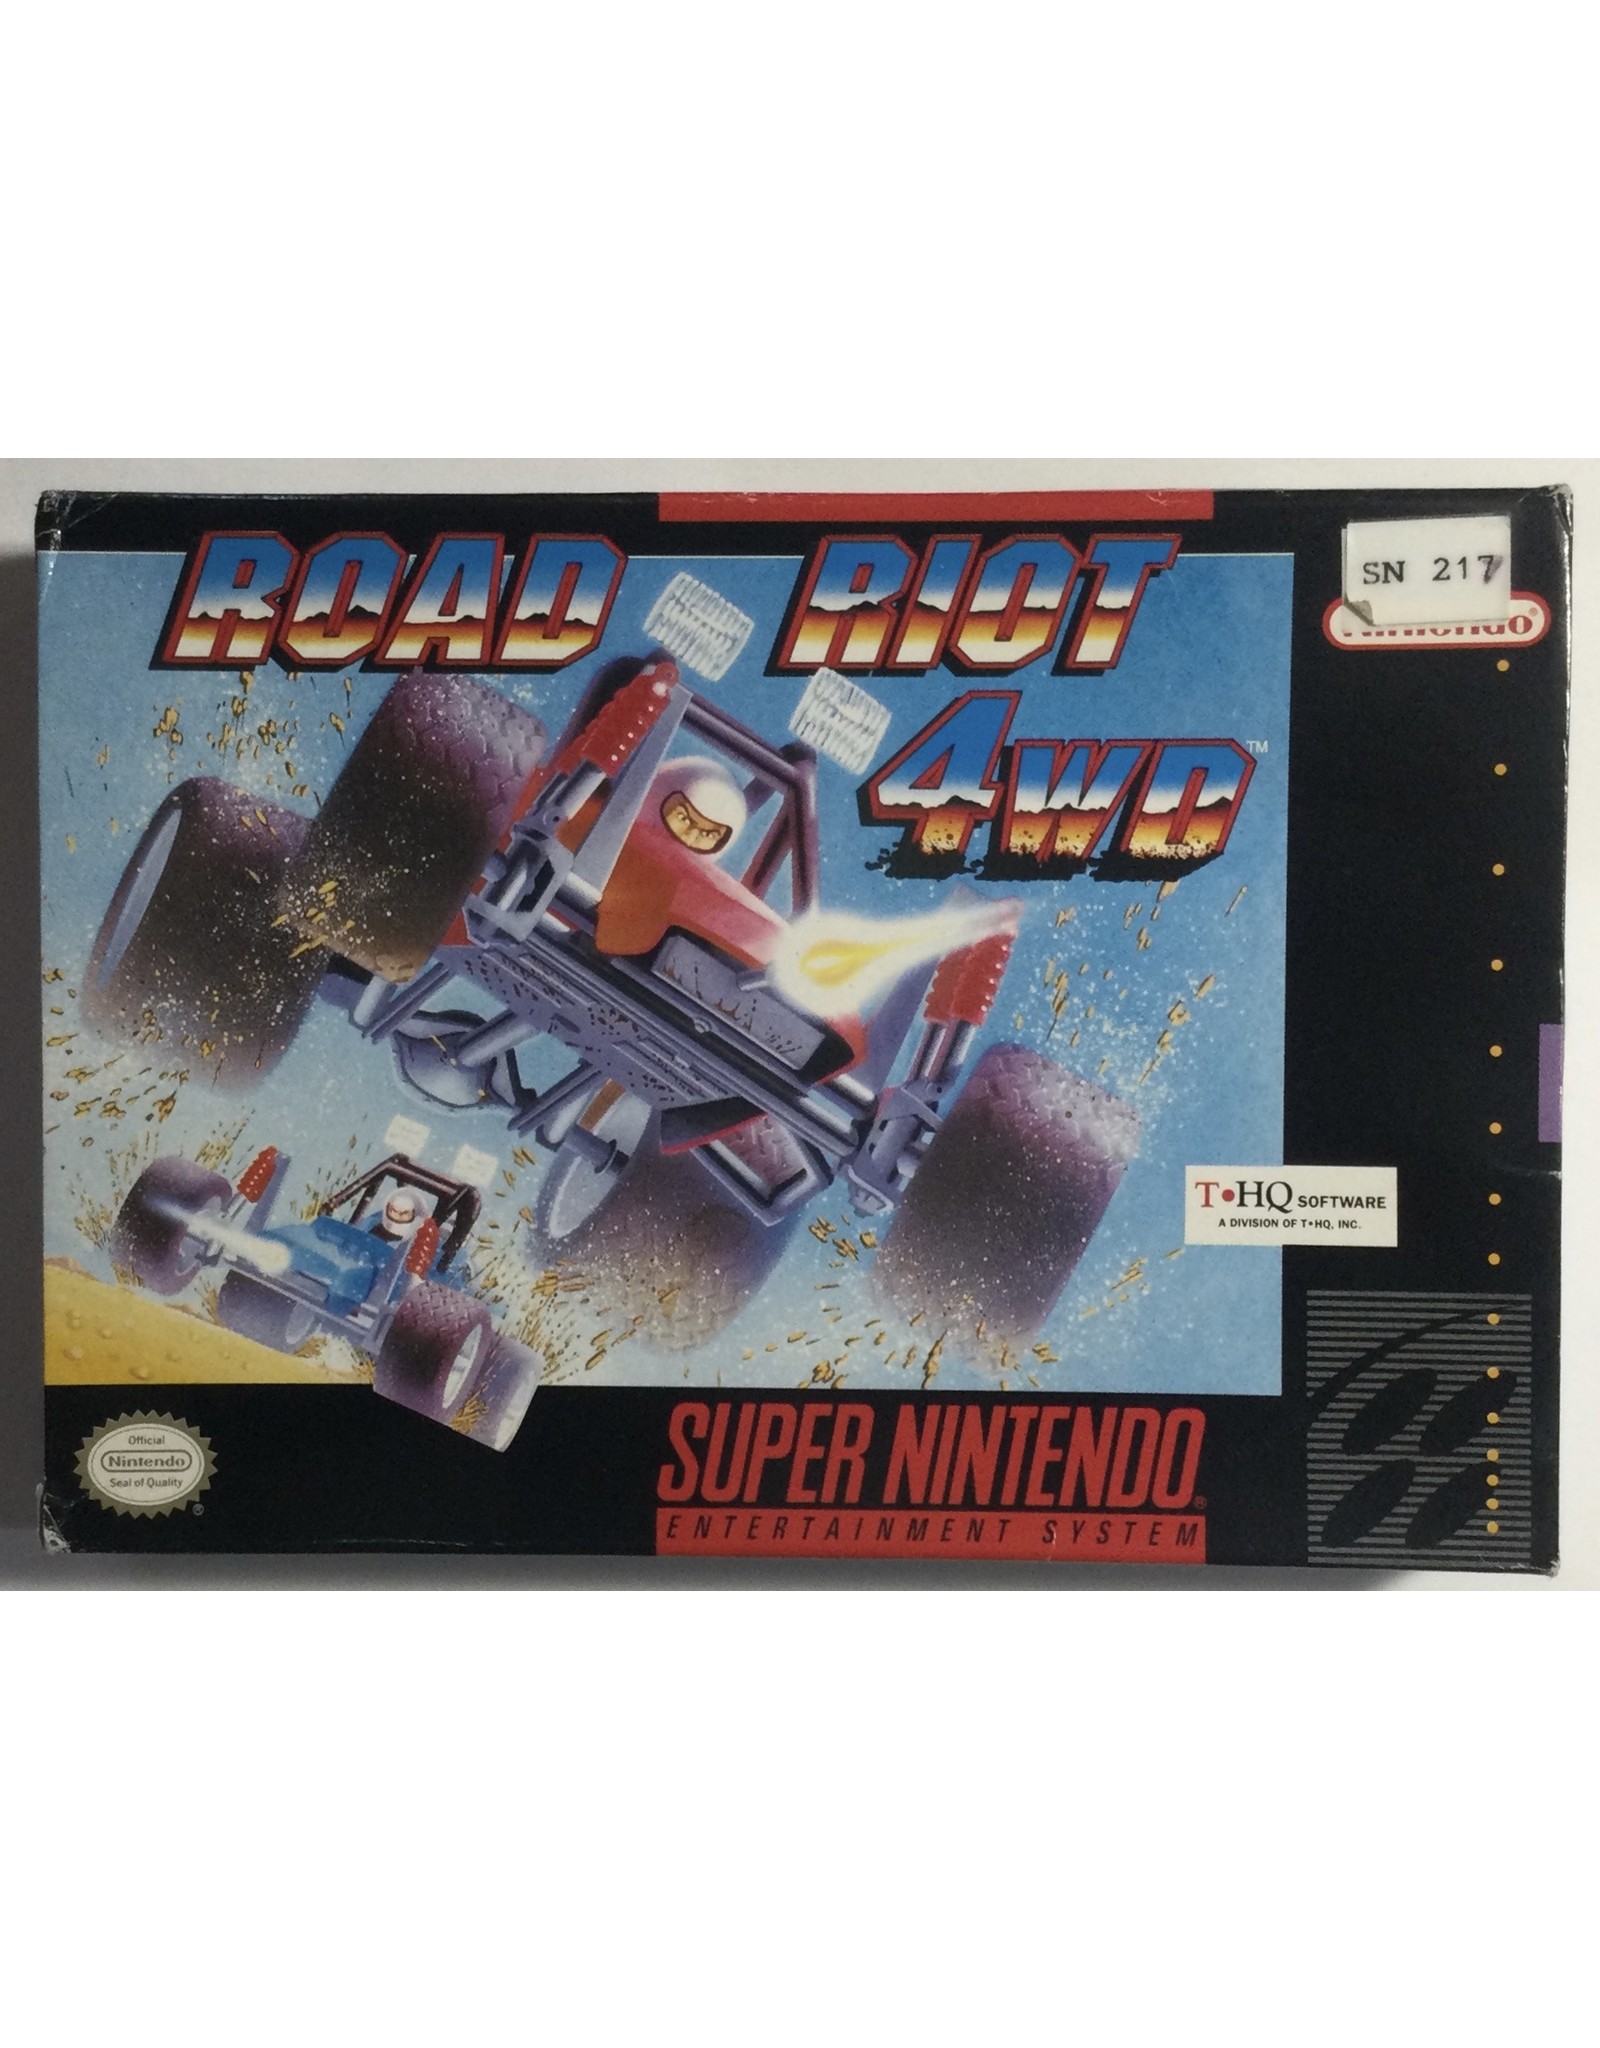 TOY HEADQUARTERS Road Riot 4wd for Super Nintendo Entertainment System (SNES) - CIB